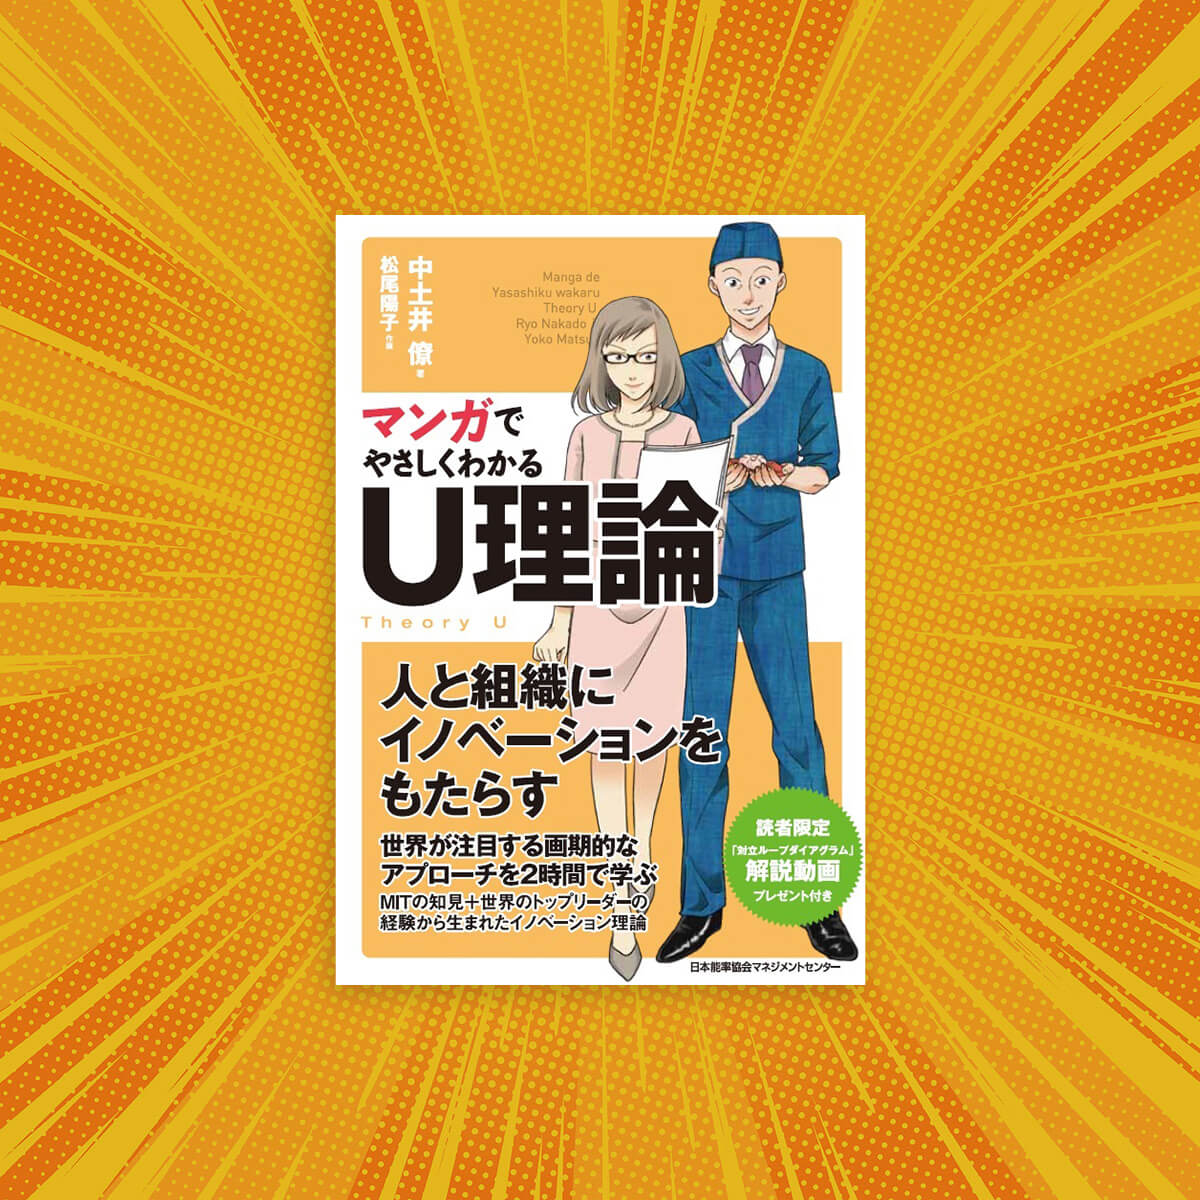 Easy reading through Manga | Theory U